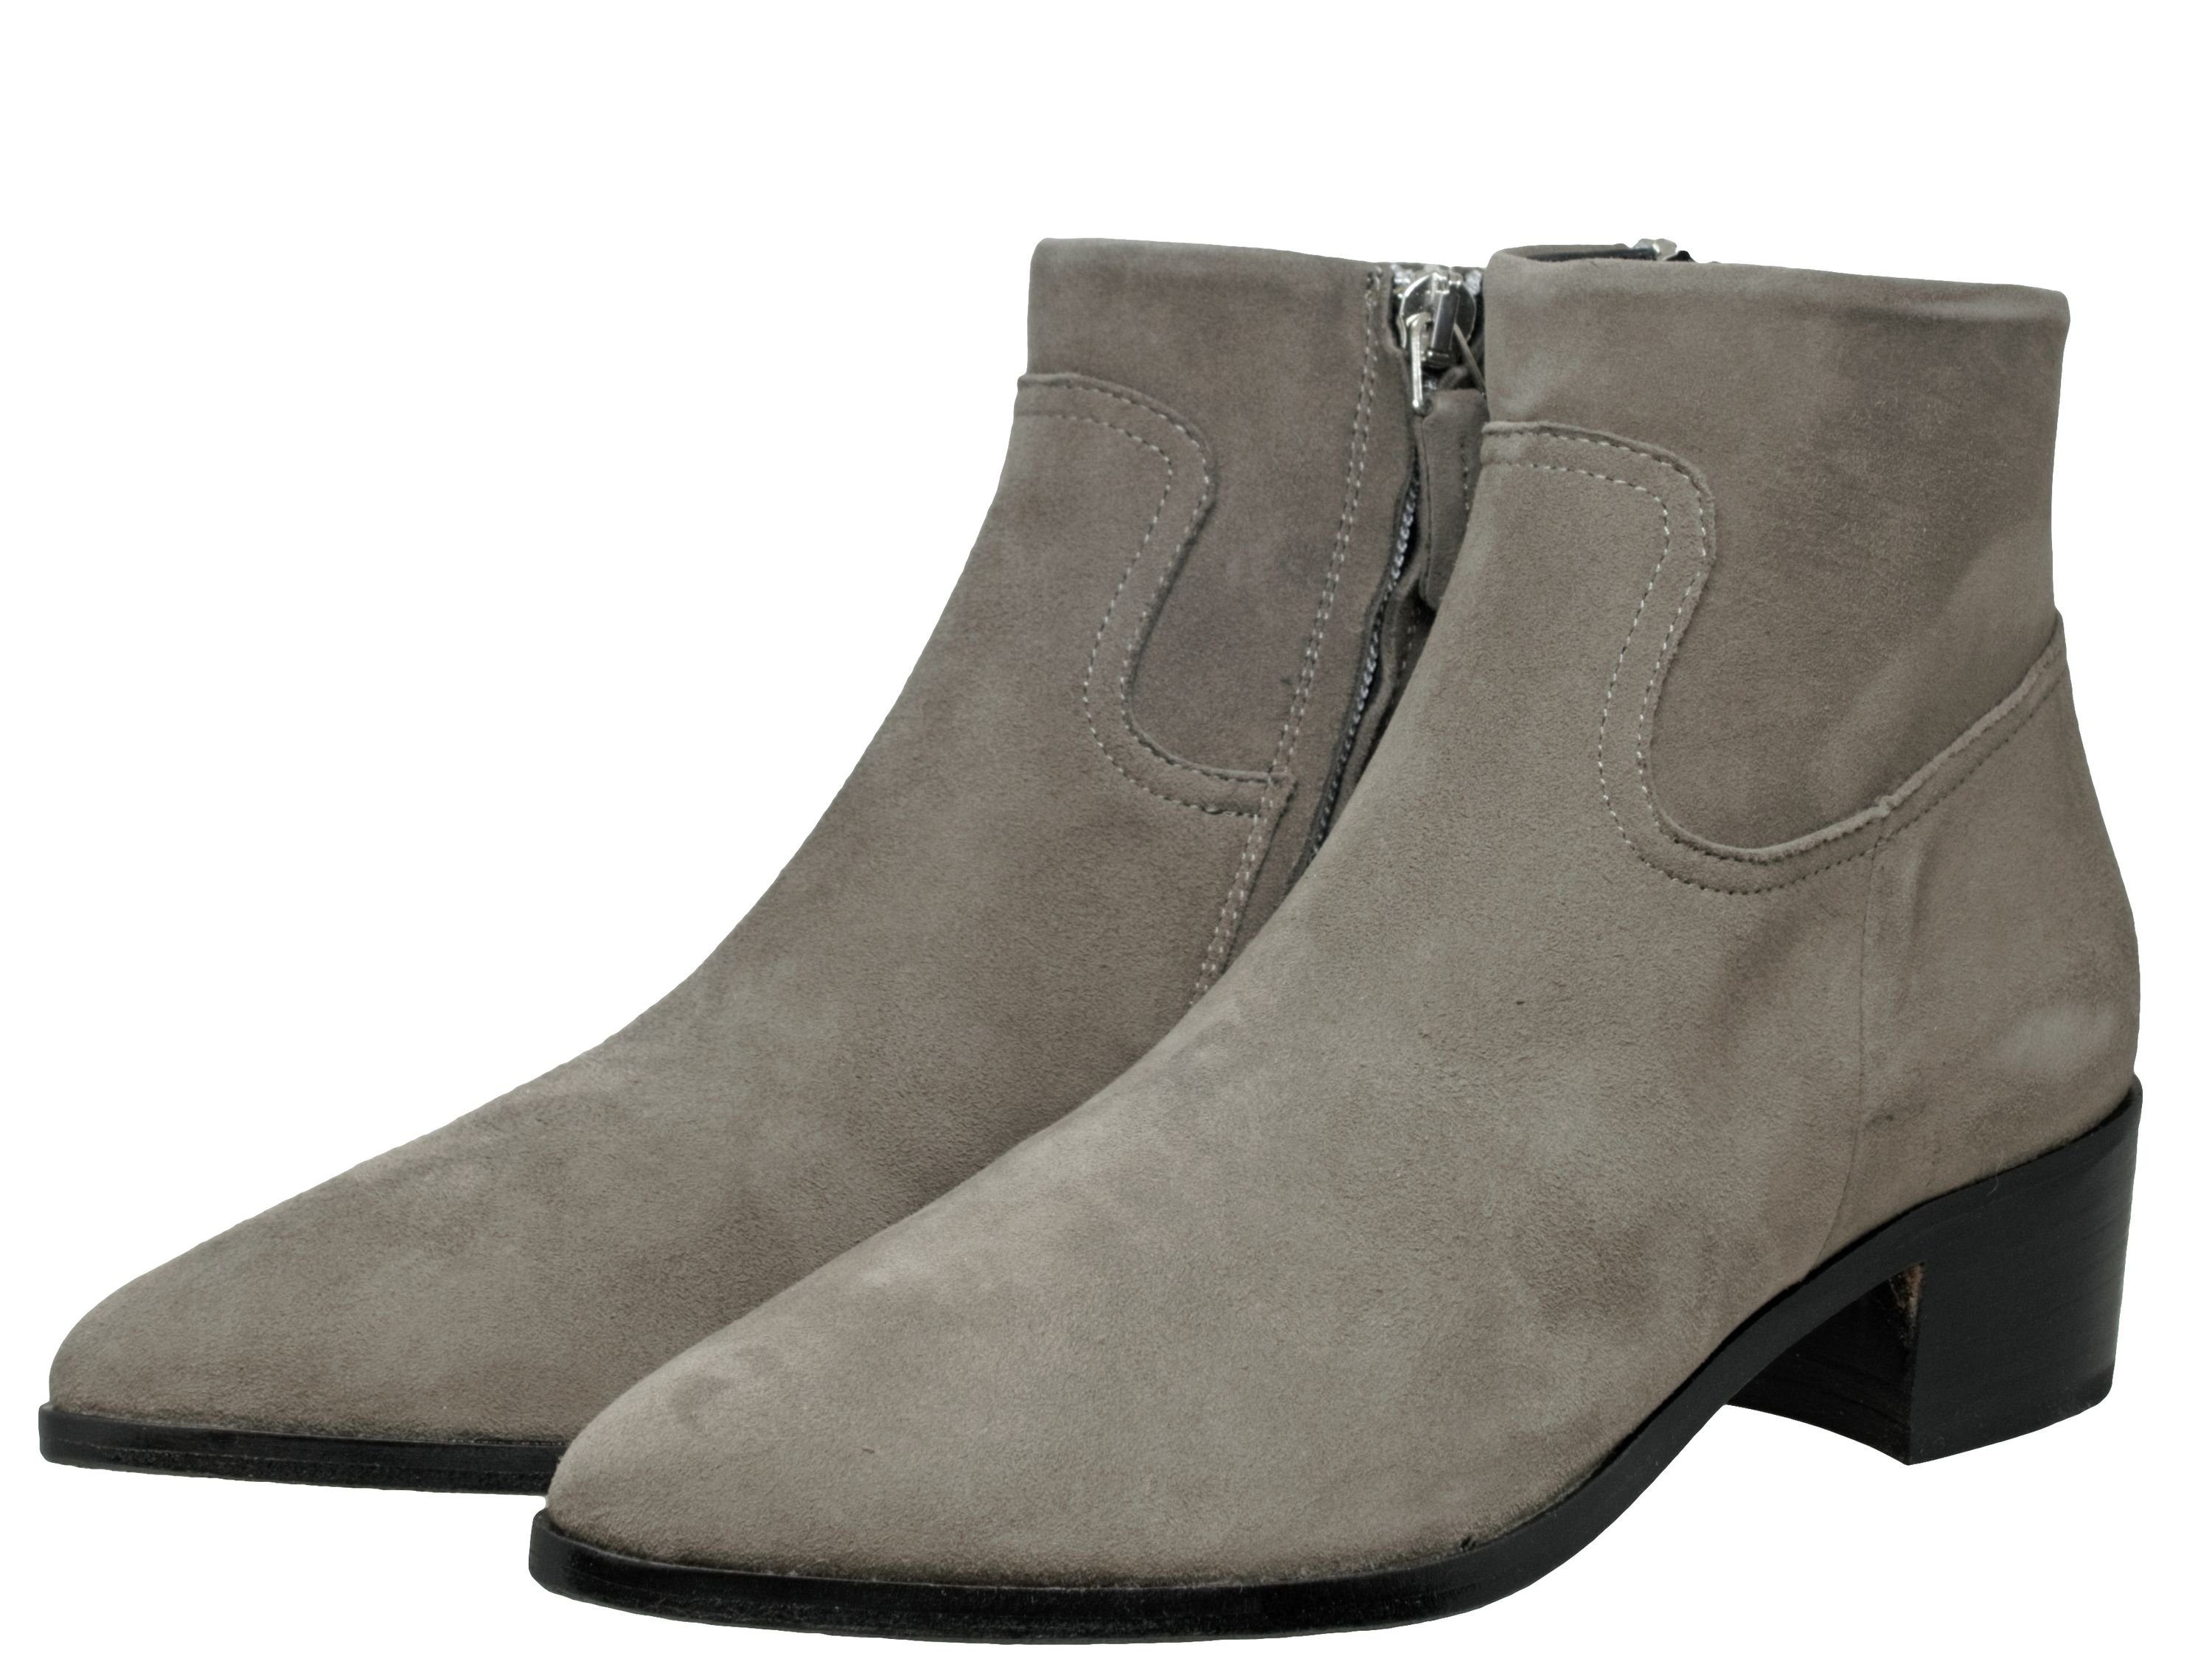 Gallucci Gallucci 30007 Stiefeletten Damen Ankle Boots Leder Grau Beige  Stiefel